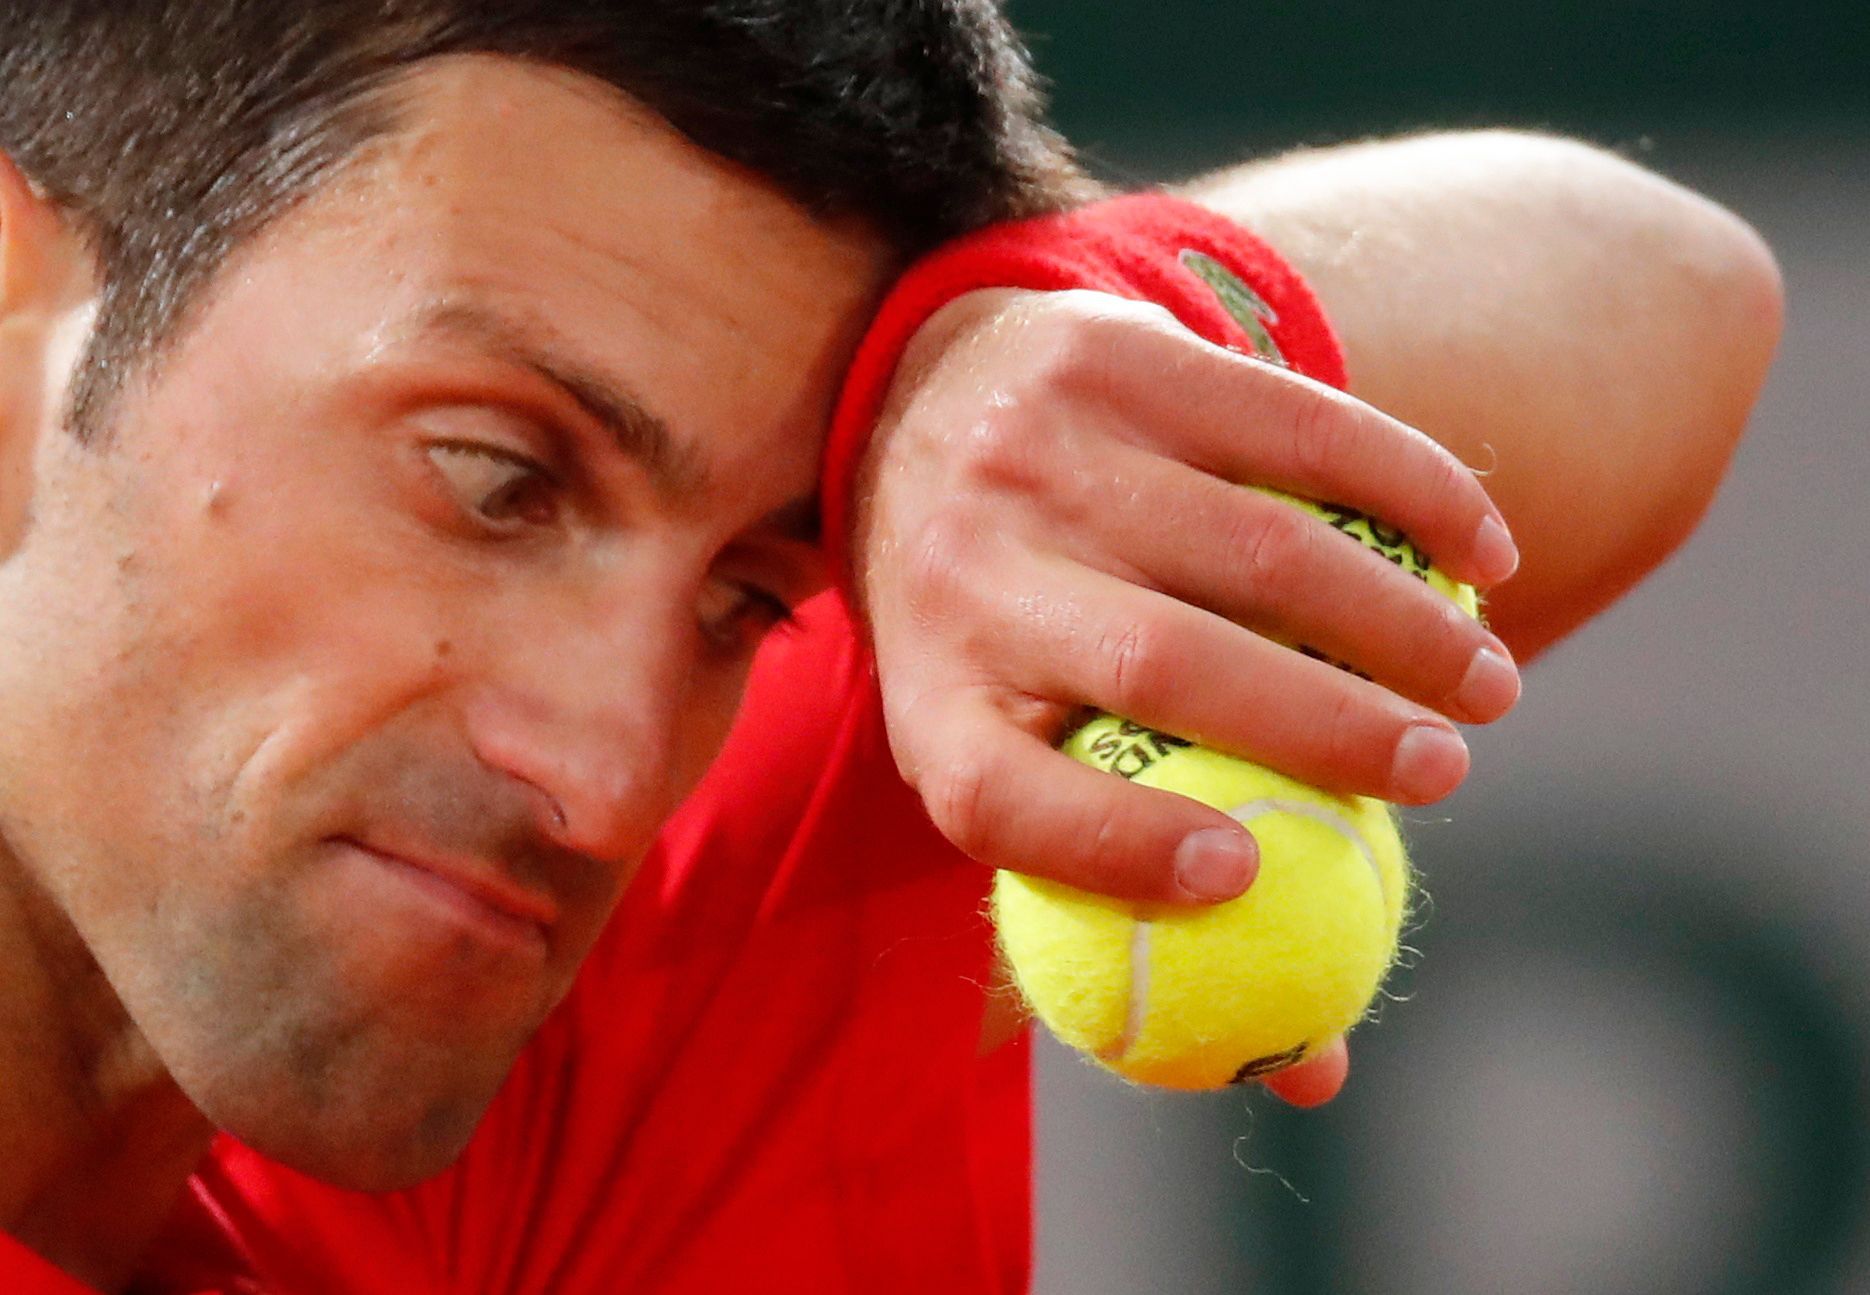 French Open, Novak Djokovič